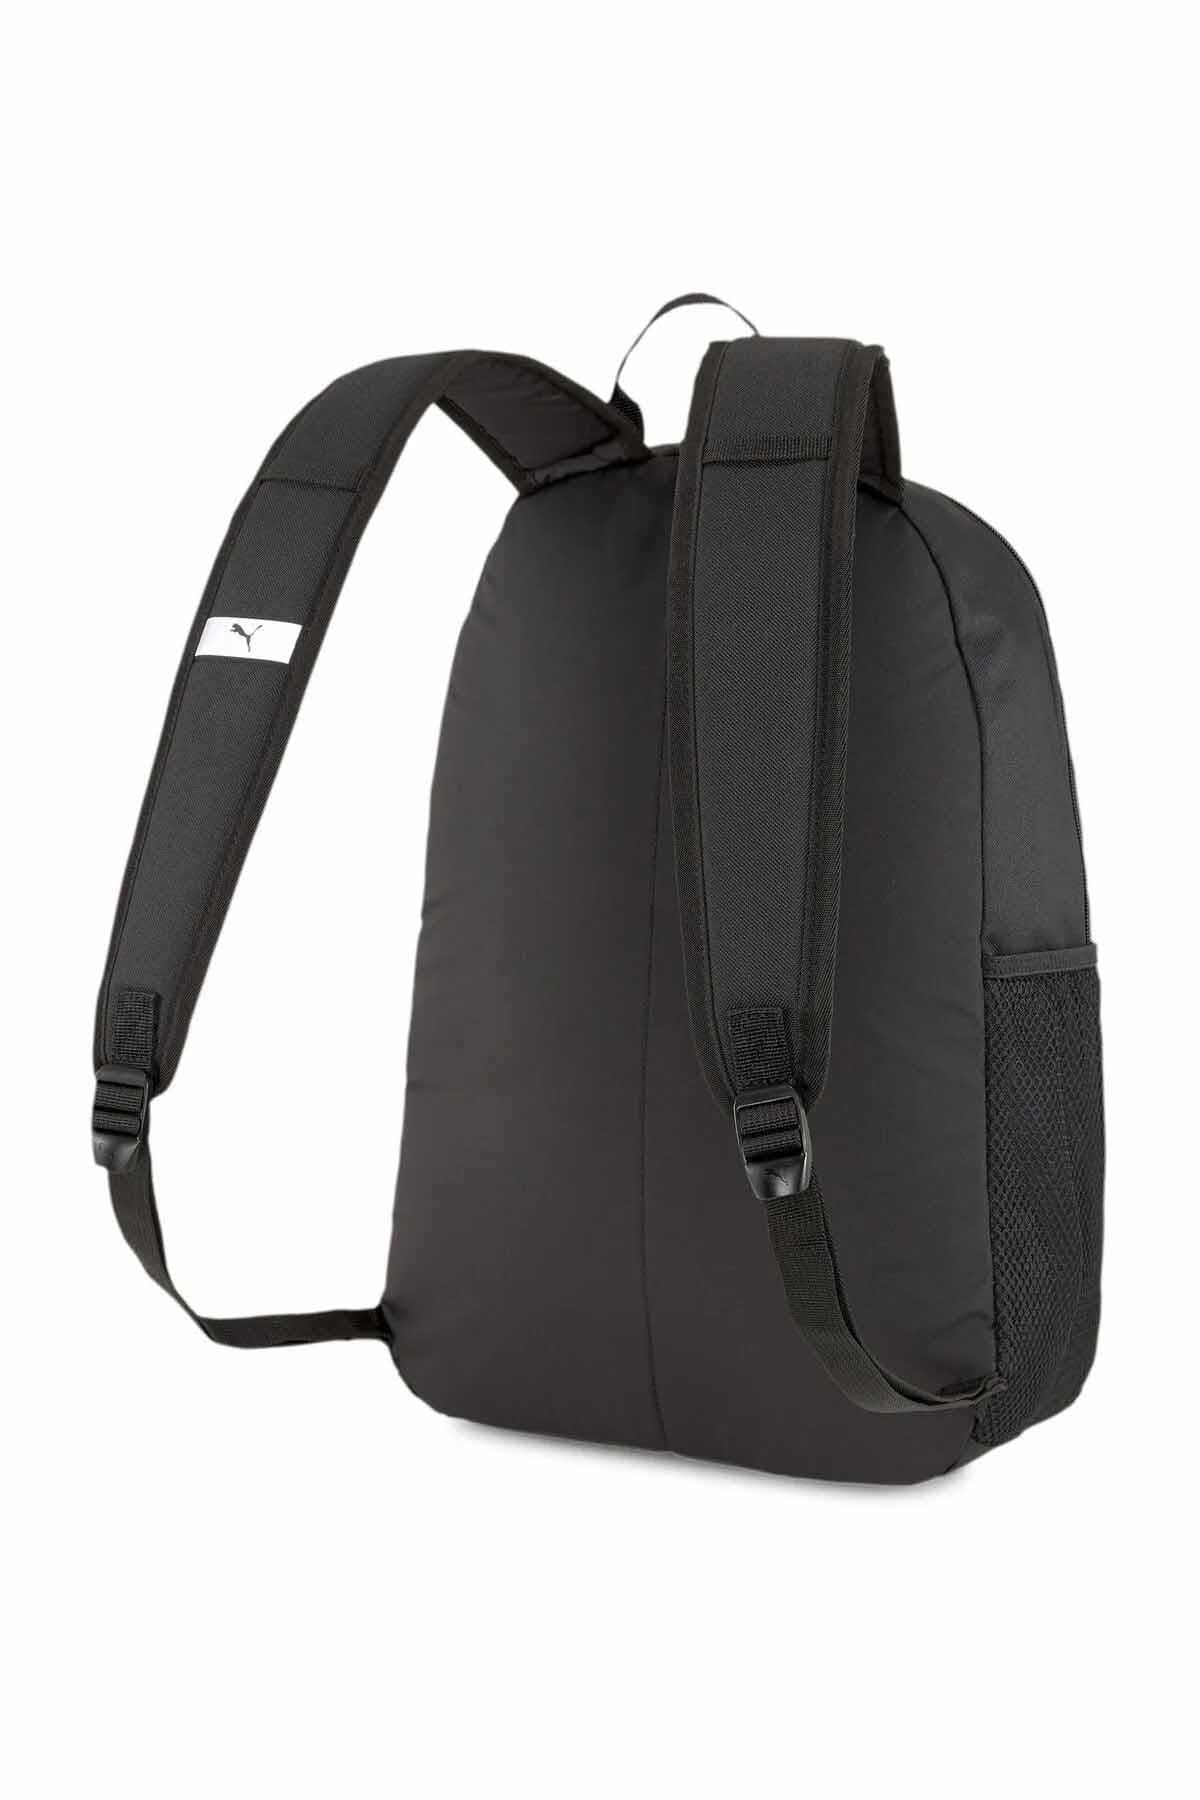 Backpack And School Bag 23 30 X 44 X 22 Cm Unisex Backpack 076854-03-1 Black